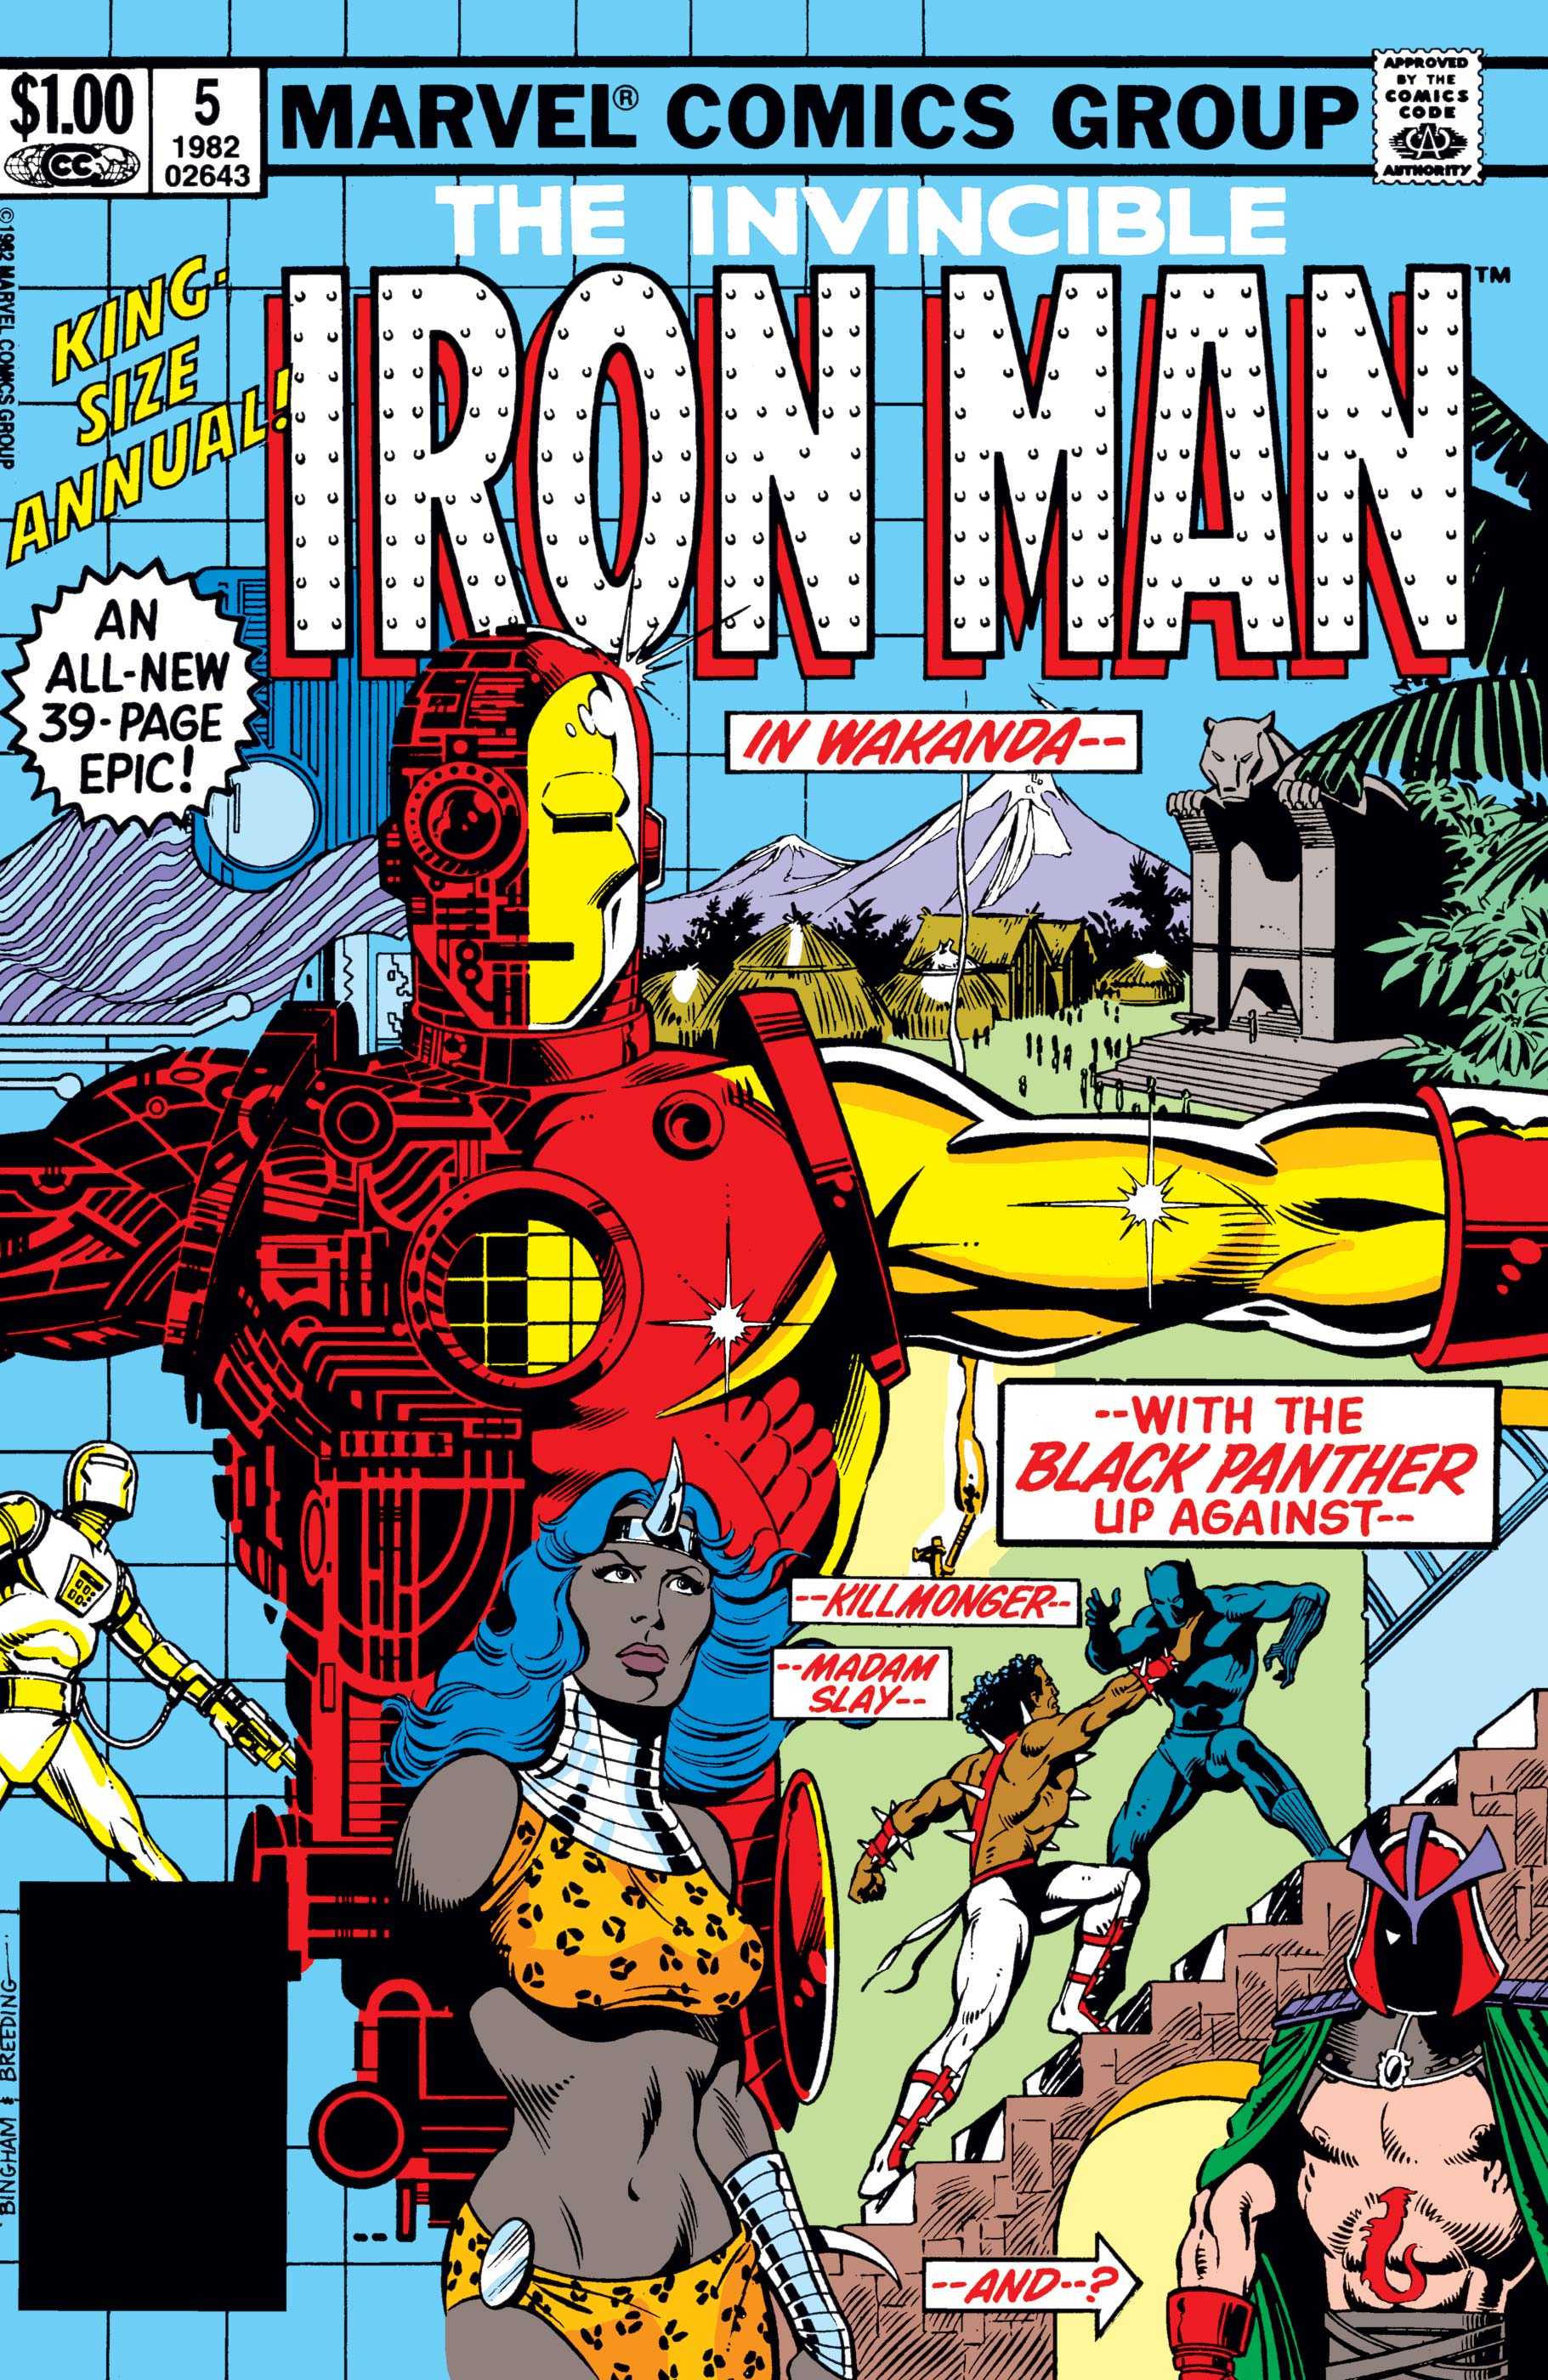 Iron Man Annual (1976) #5